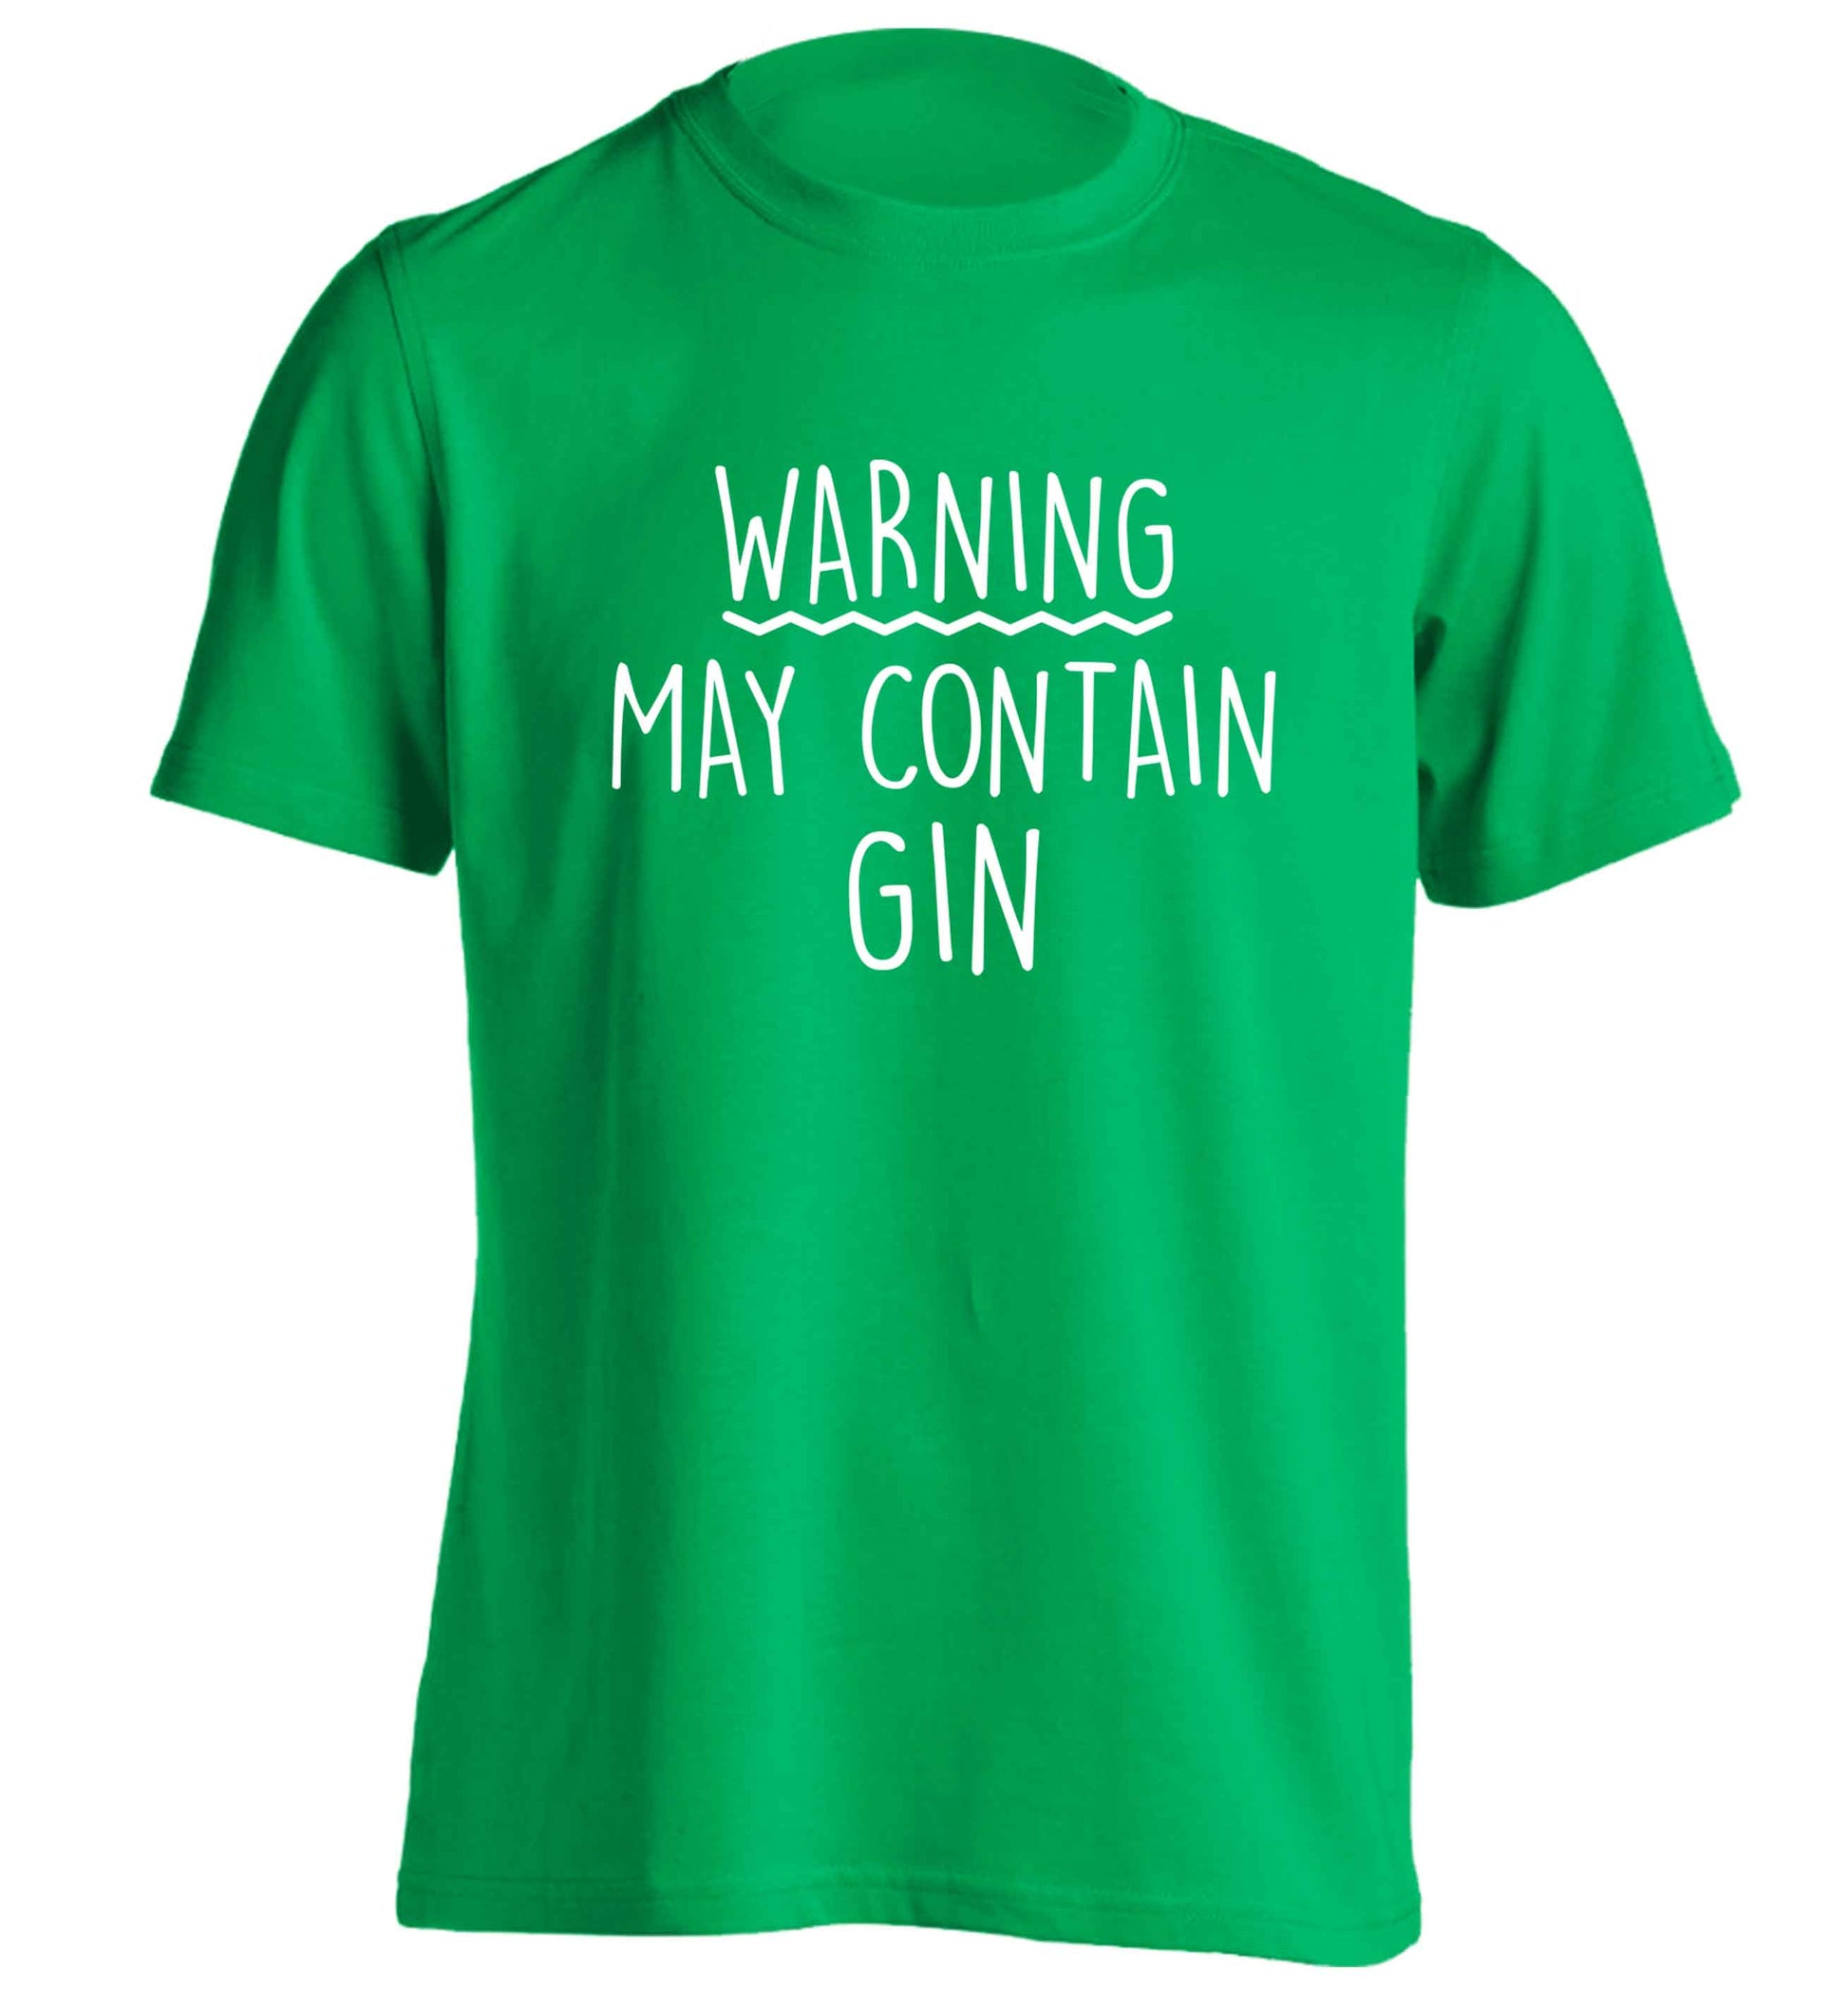 Warning may contain gin adults unisex green Tshirt 2XL